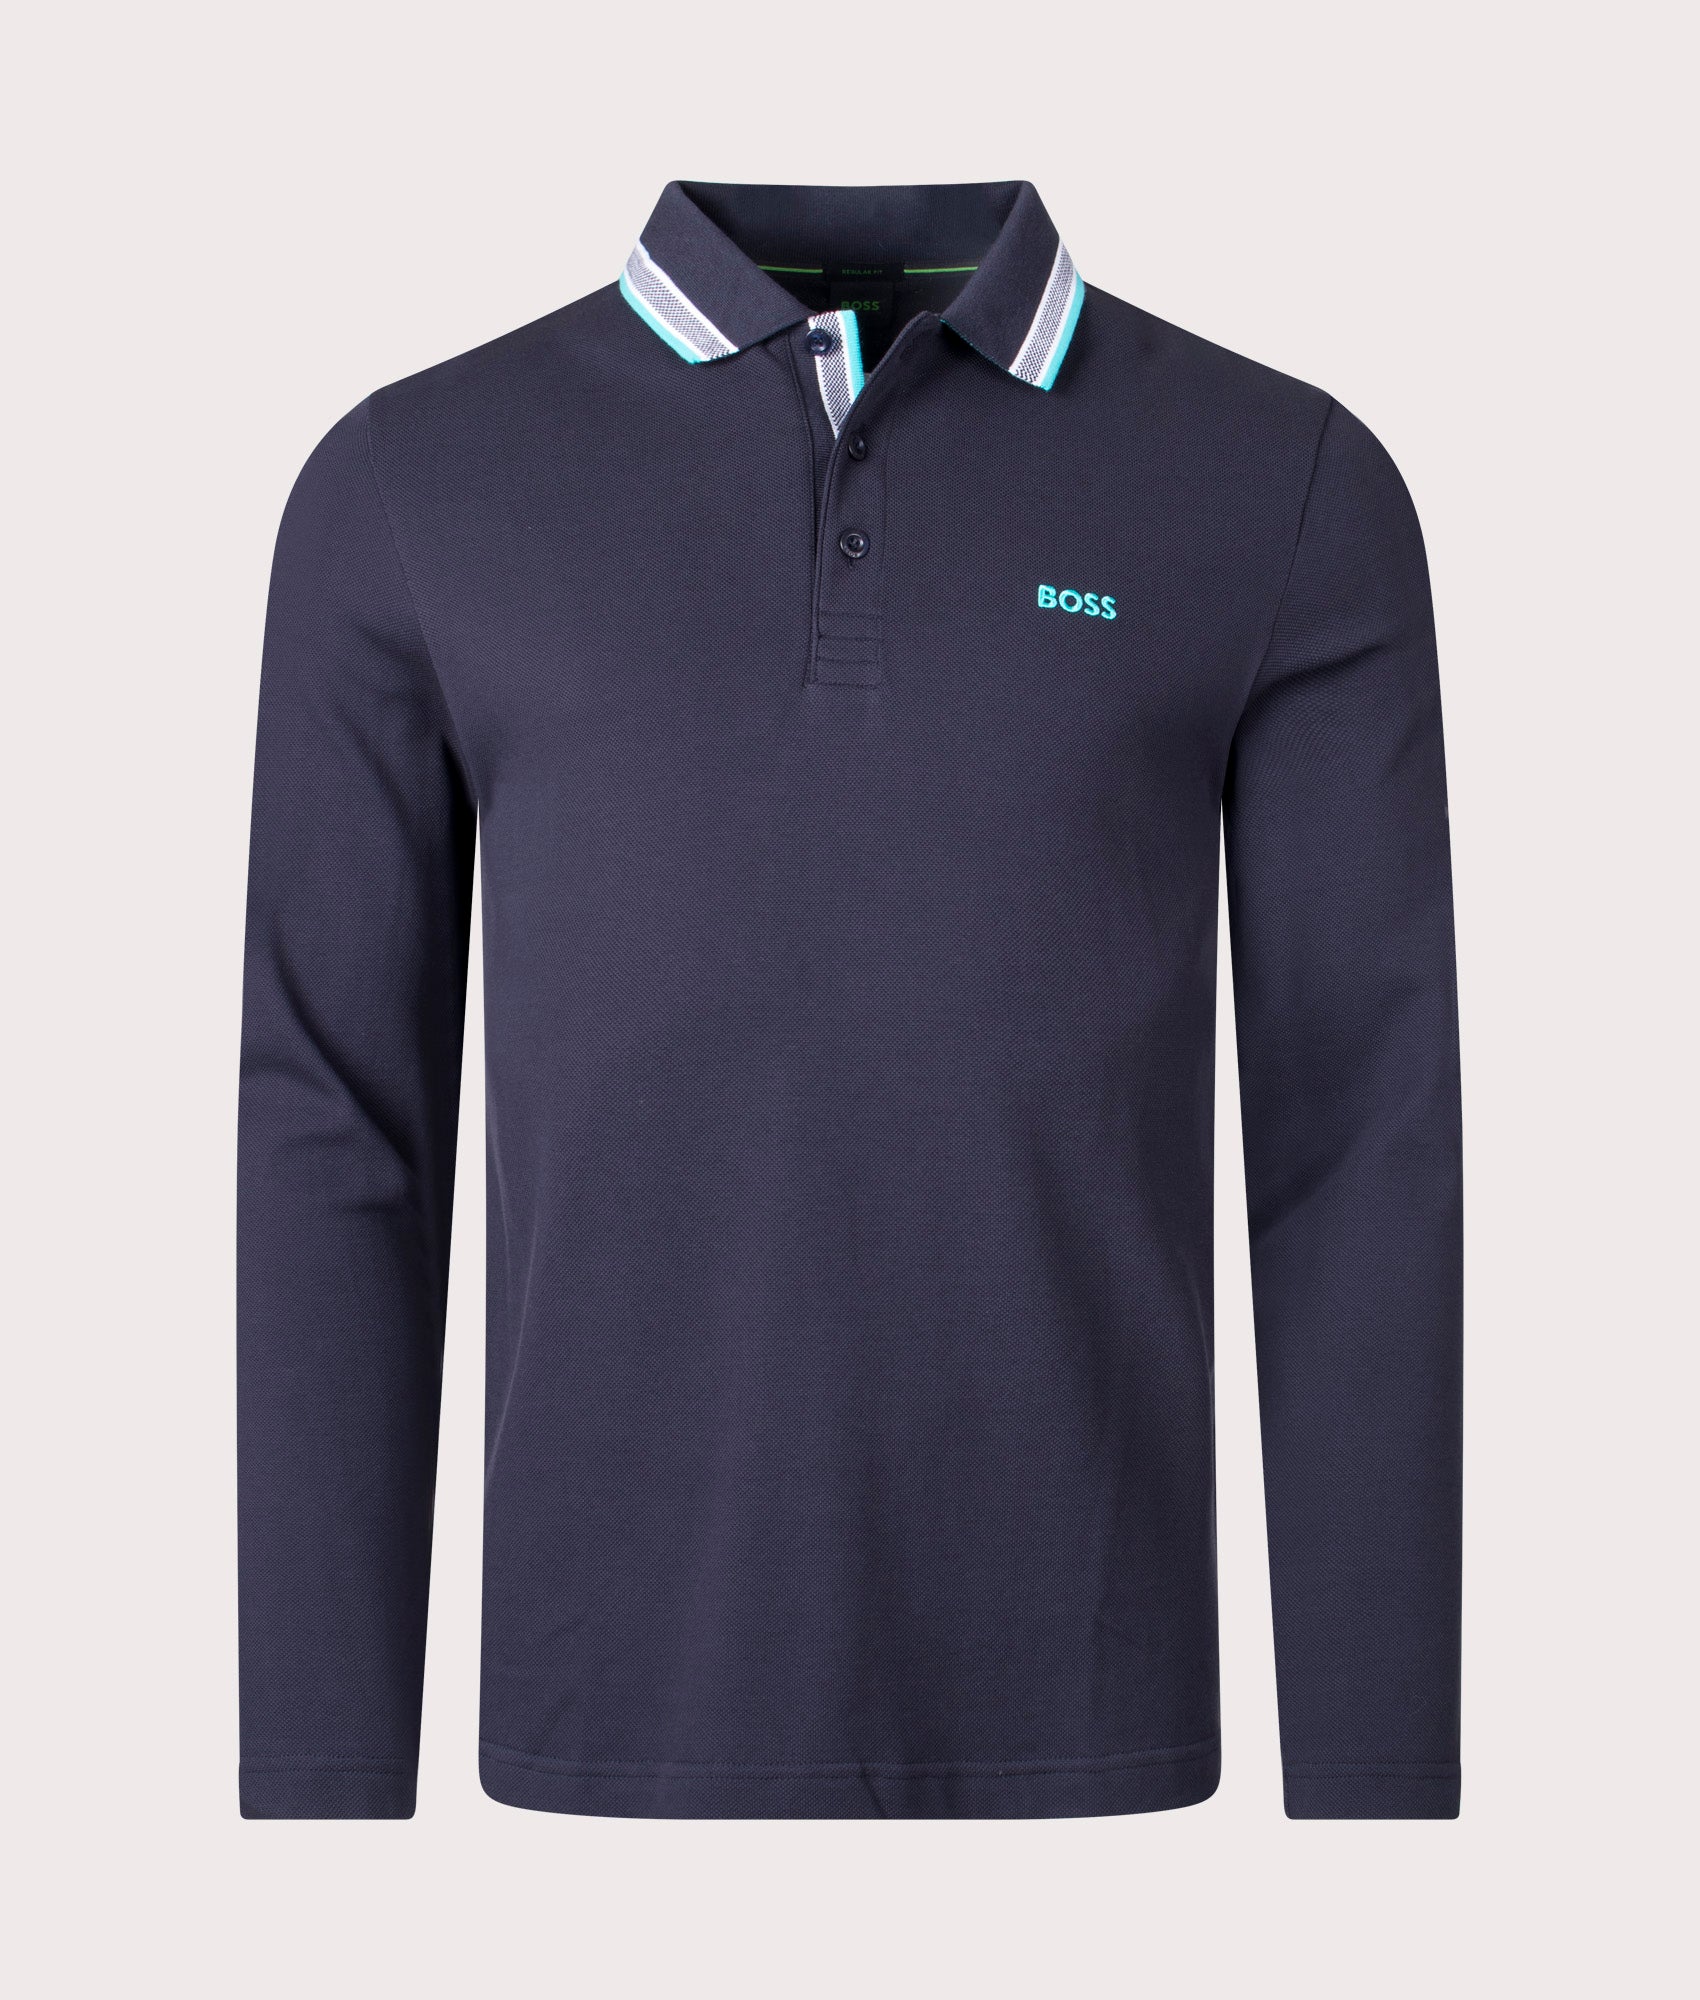 BOSS Mens Plisy Long Sleeve Polo Shirt - Colour: 402 Dark Blue - Size: Large